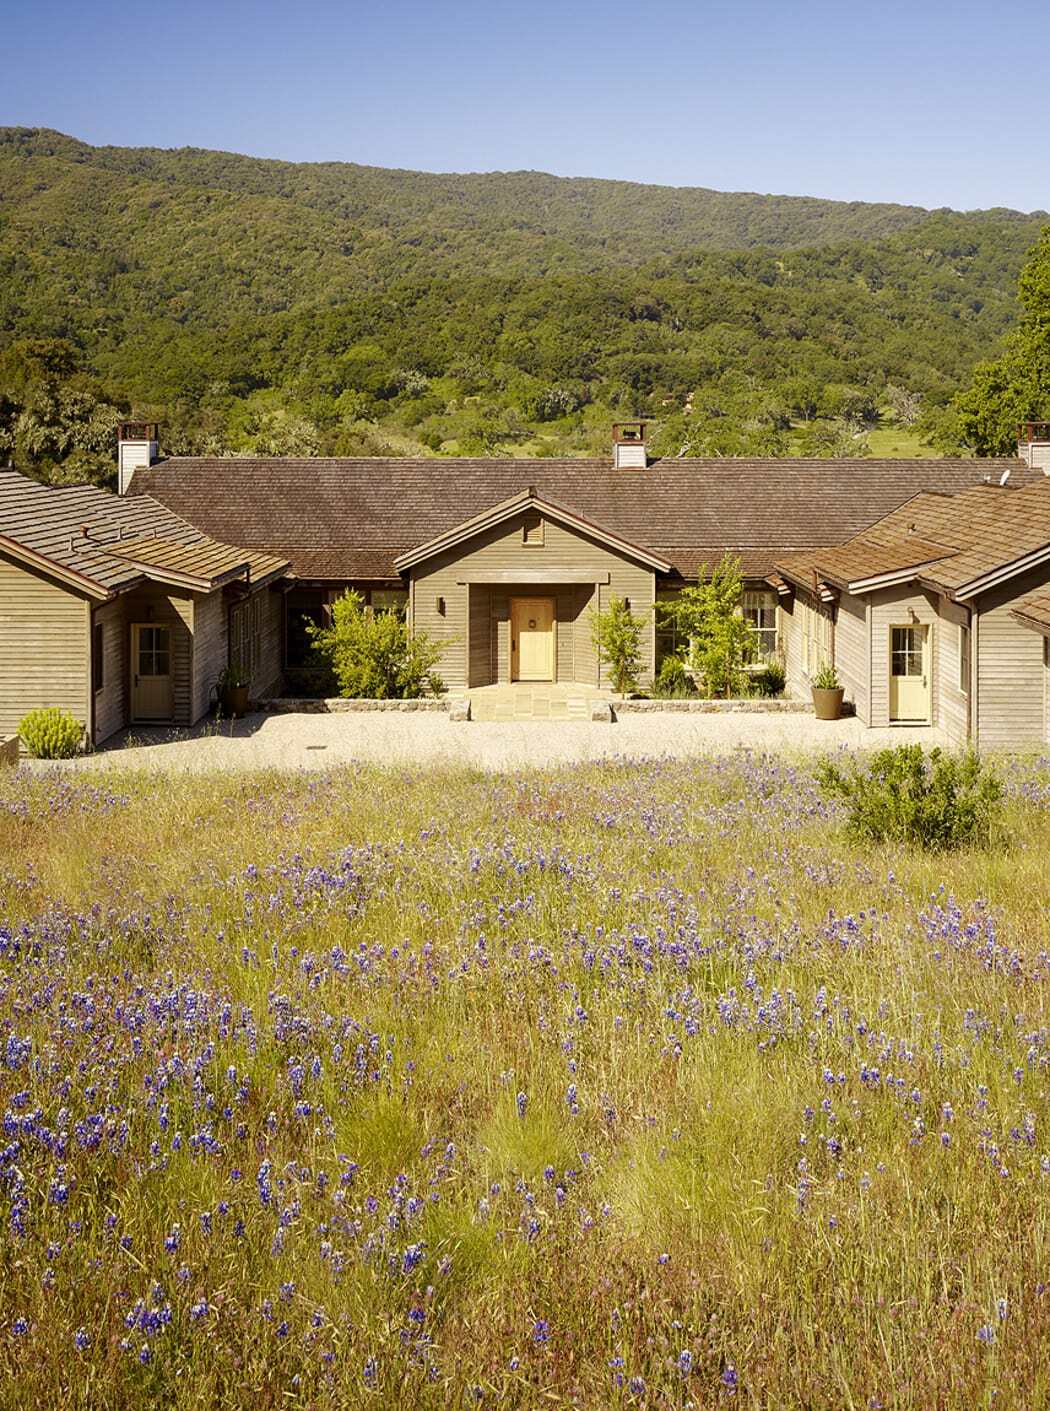 Santa Lucia Preserve Residence, a Private Retreat in Coastal California Inspired by South American Estancia Architecture